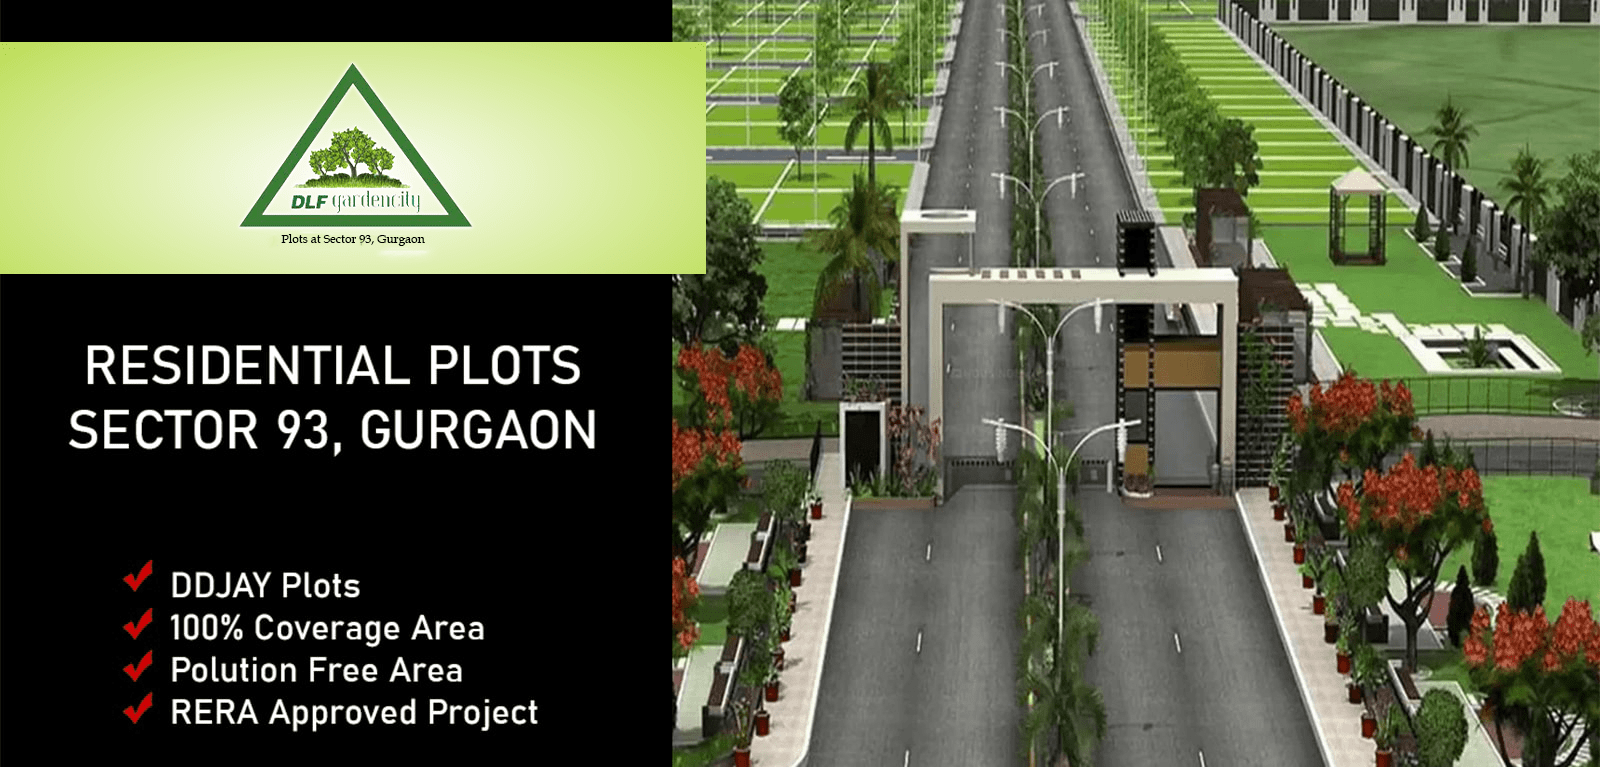 dlf gardencity enclave residential plots sector 93 gurgaon